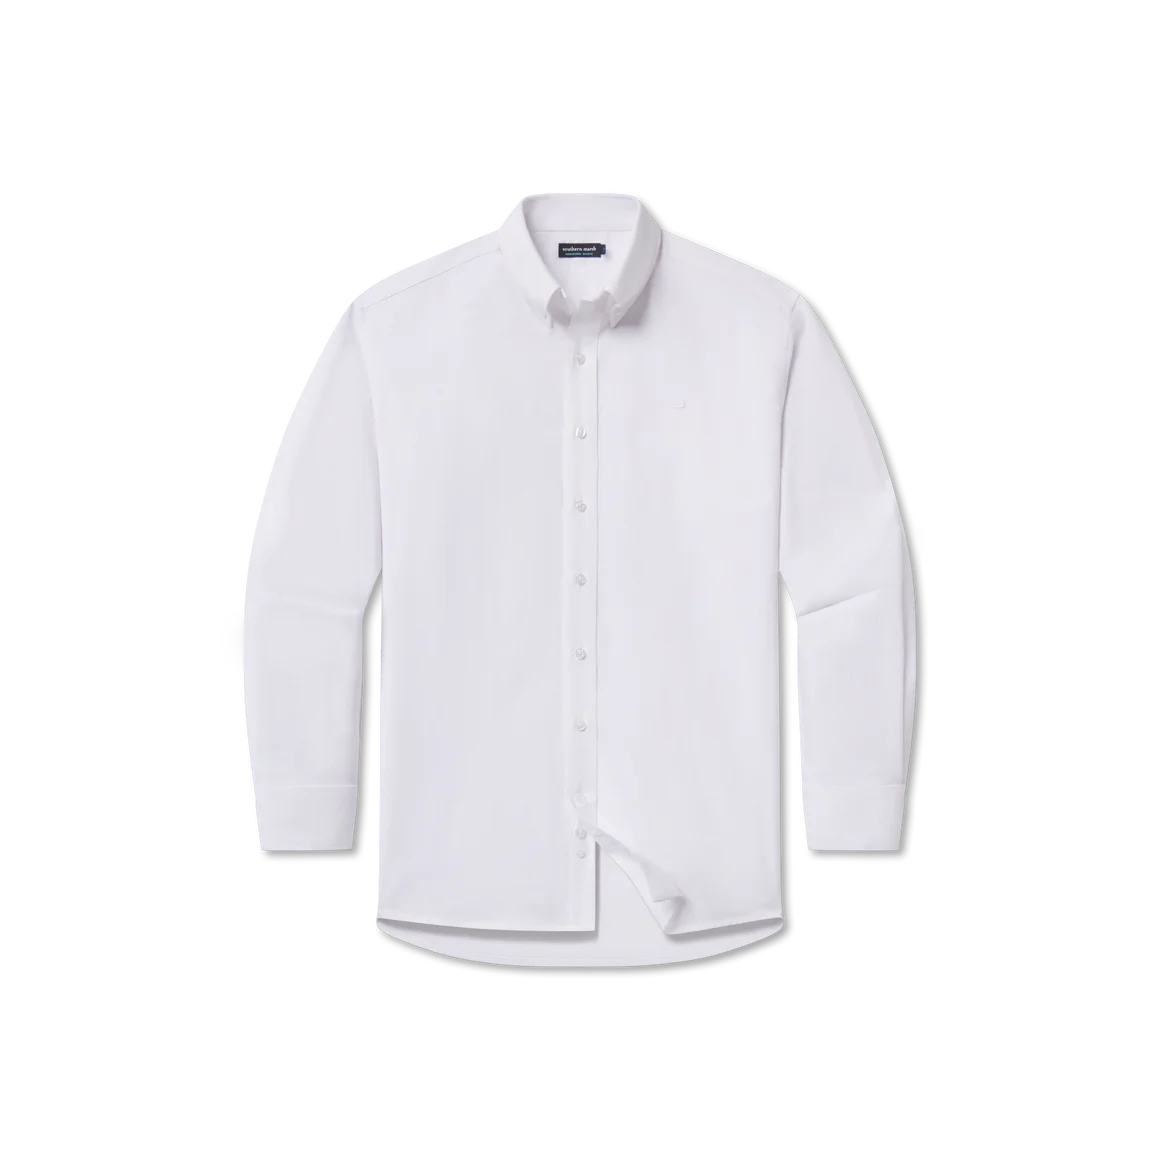 White Classic Oxford Dress Shirt by Southern Marsh